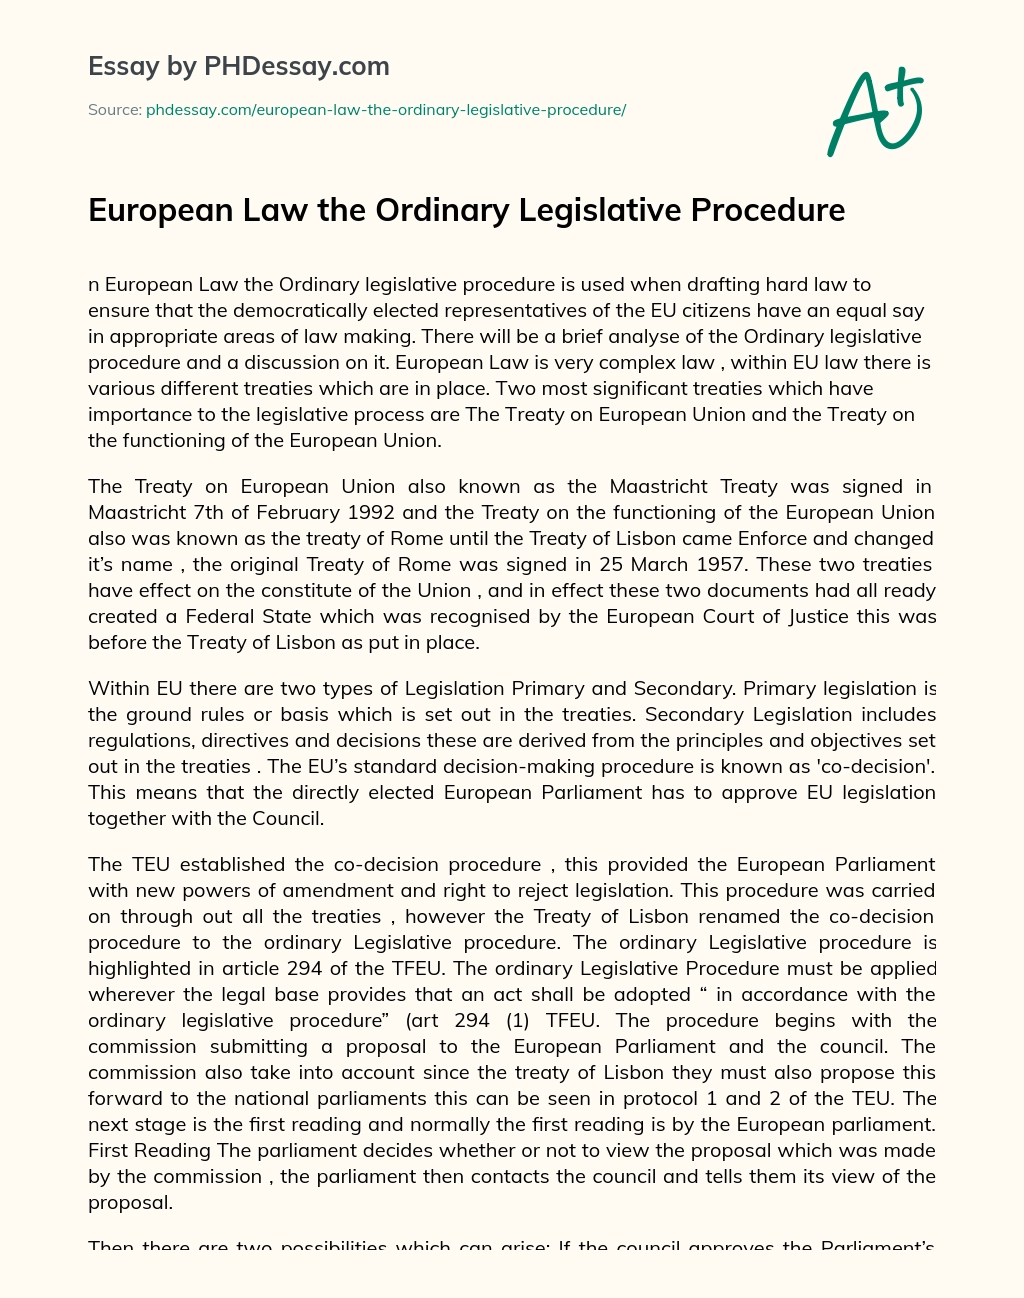 European Law the Ordinary Legislative Procedure essay